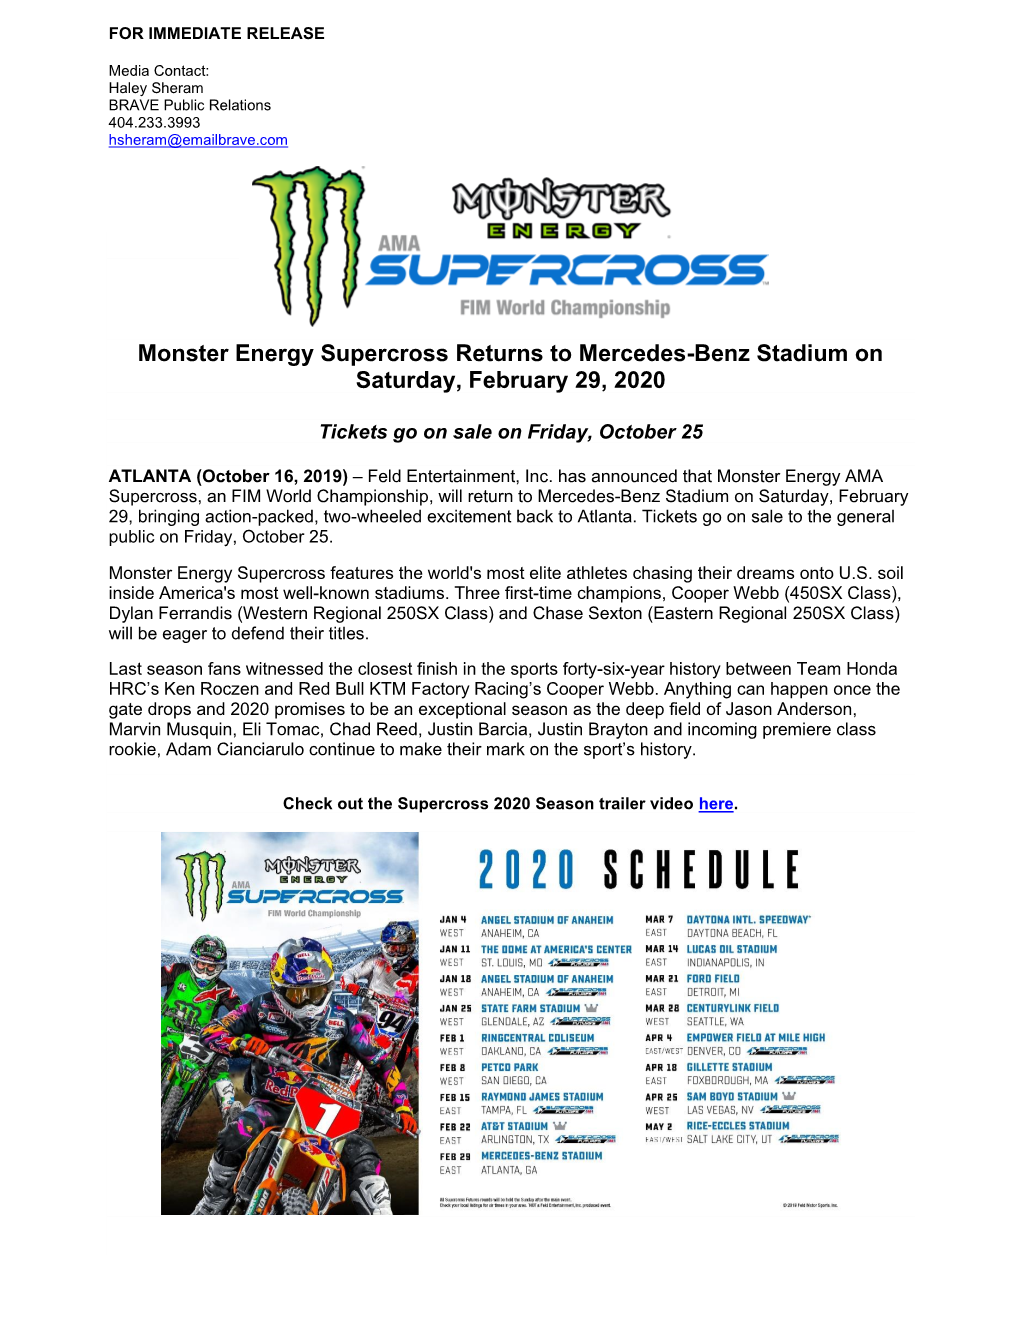 Monster Energy Supercross Returns to Mercedes-Benz Stadium on Saturday, February 29, 2020